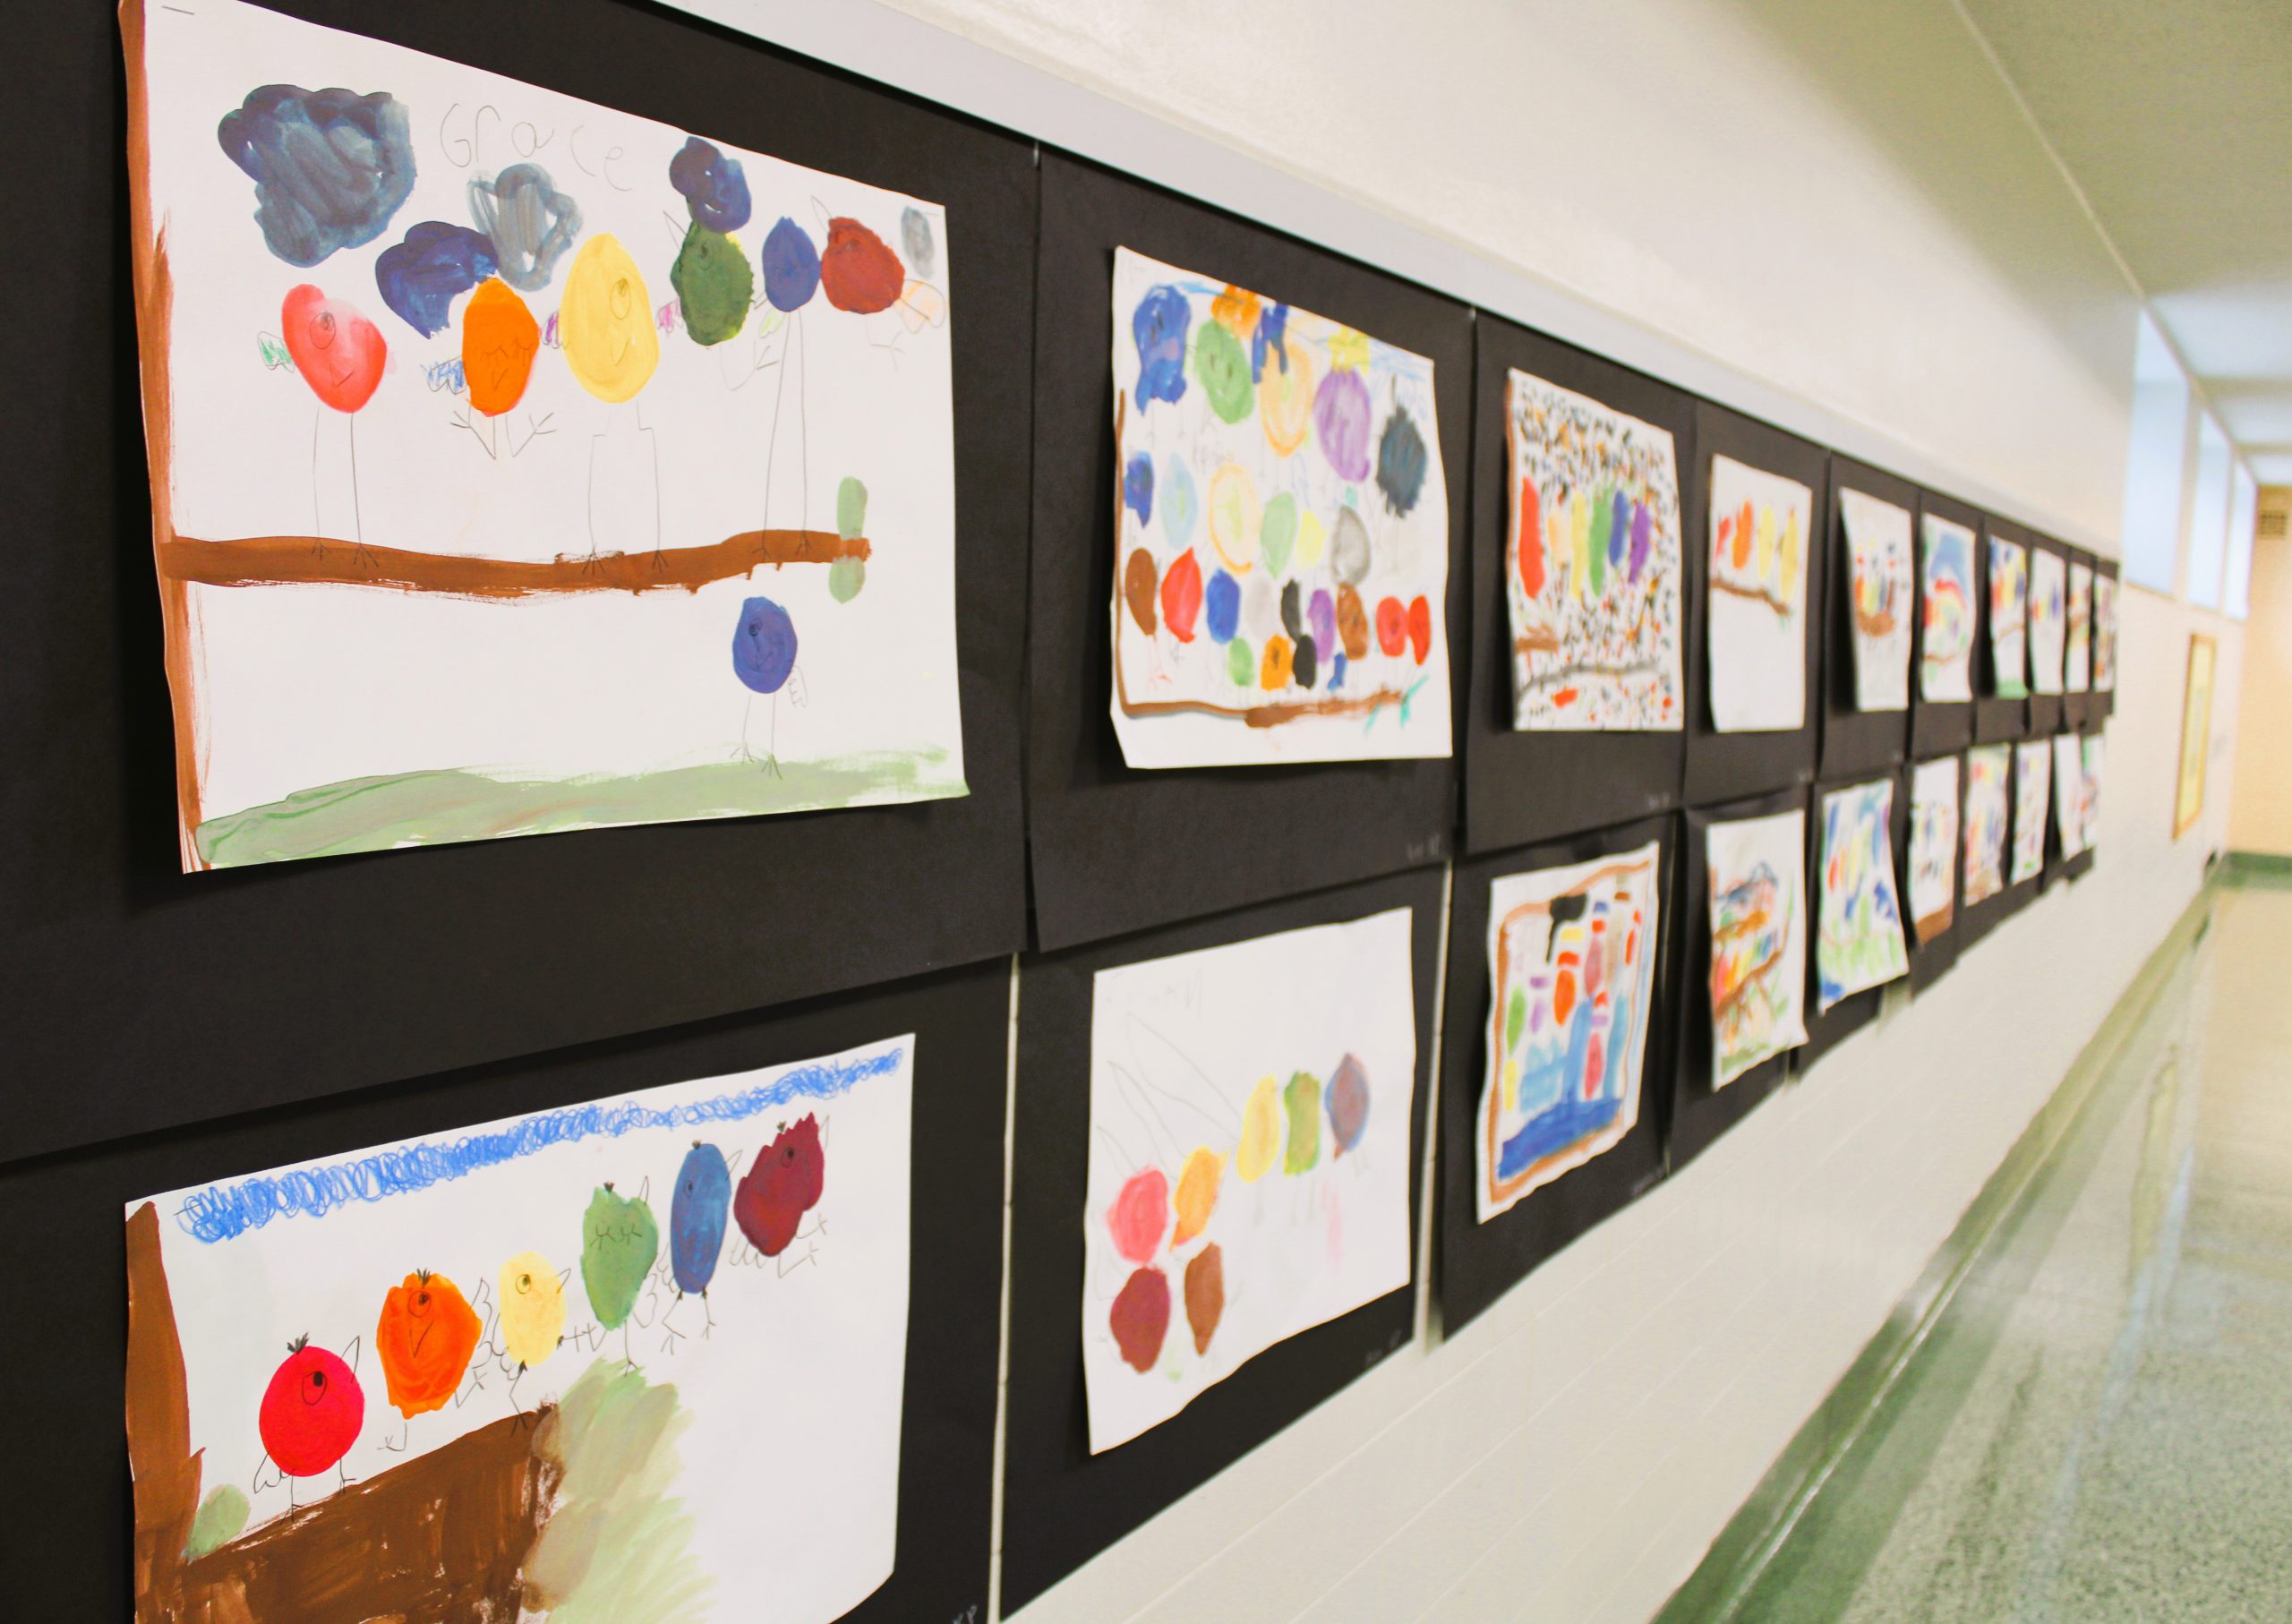 Image of student art hanging in hallway.